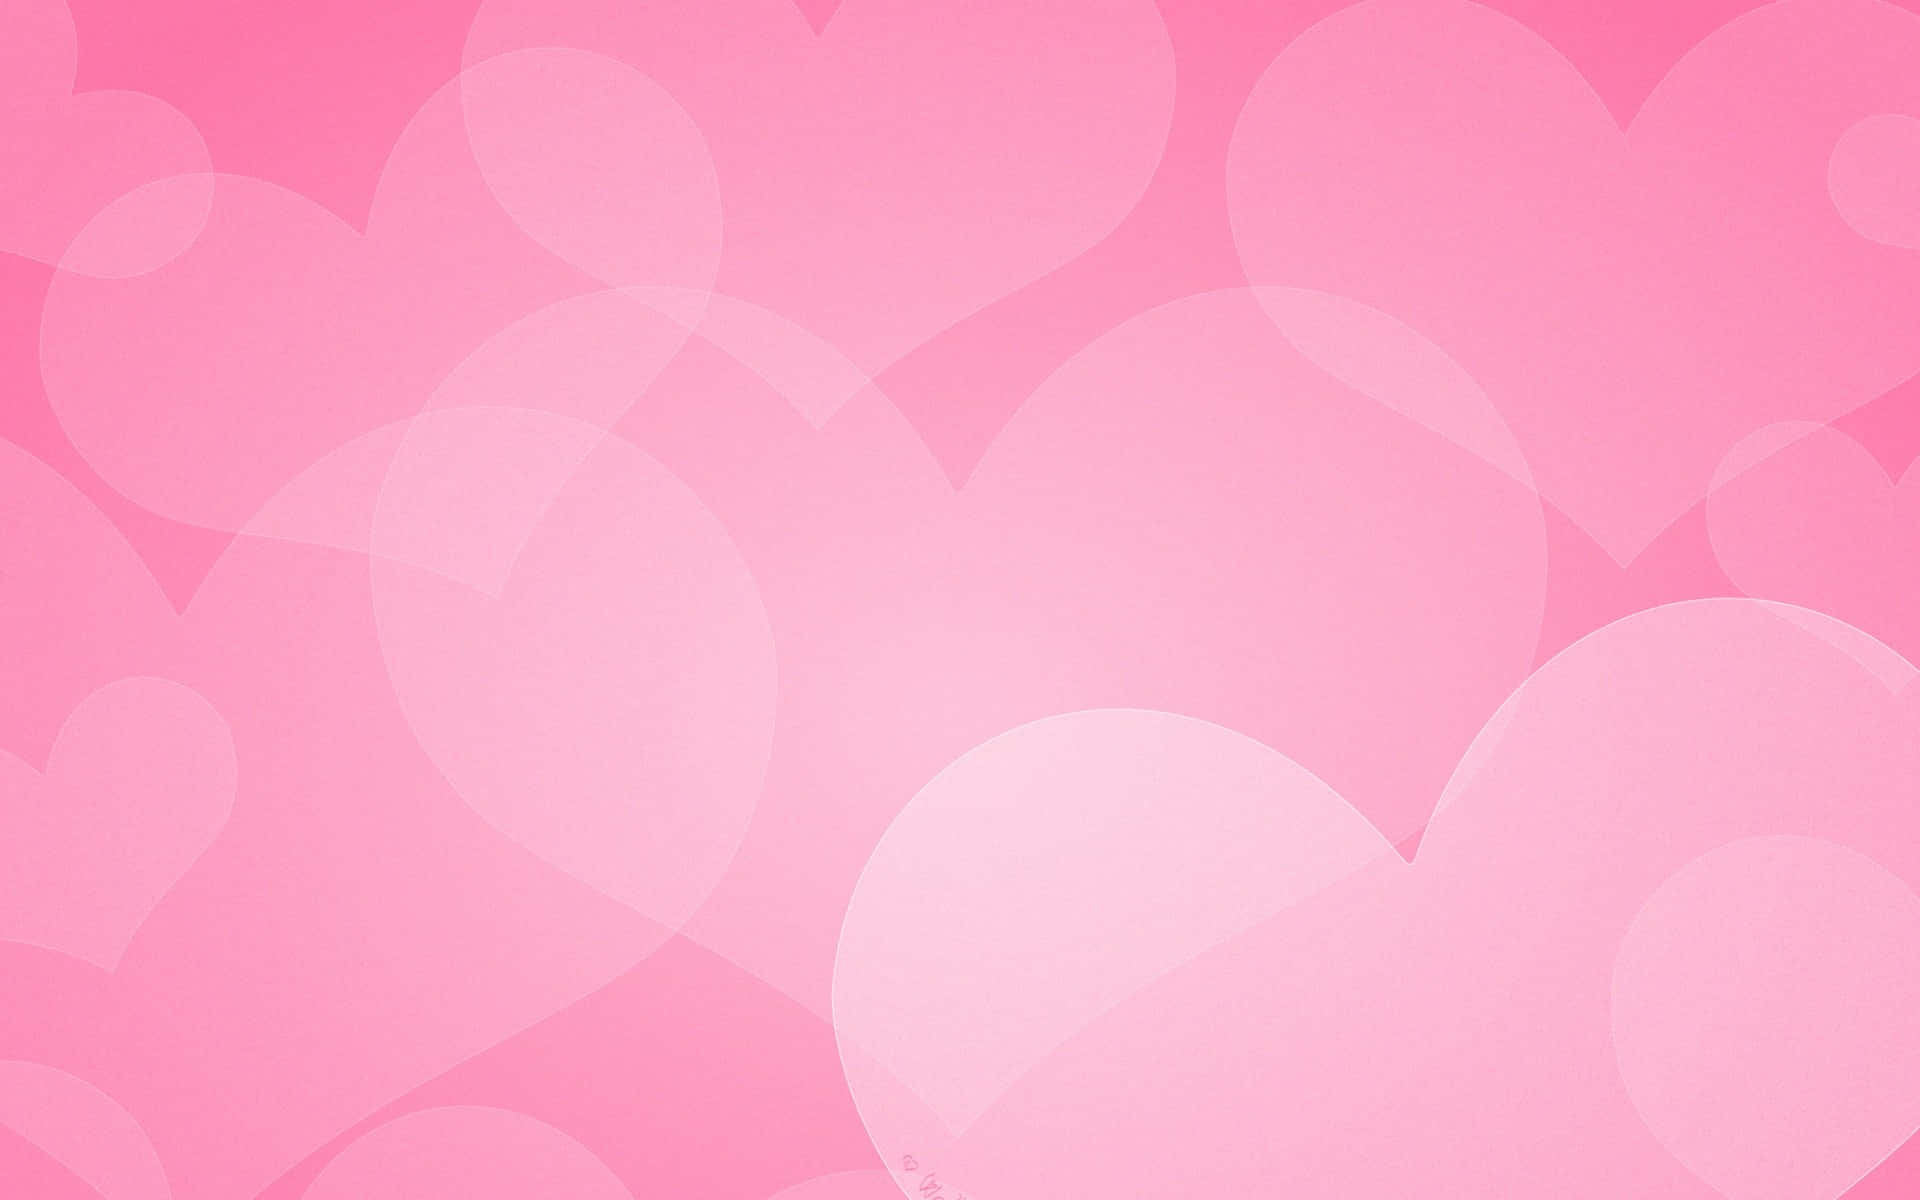 Soft, feminine pink background